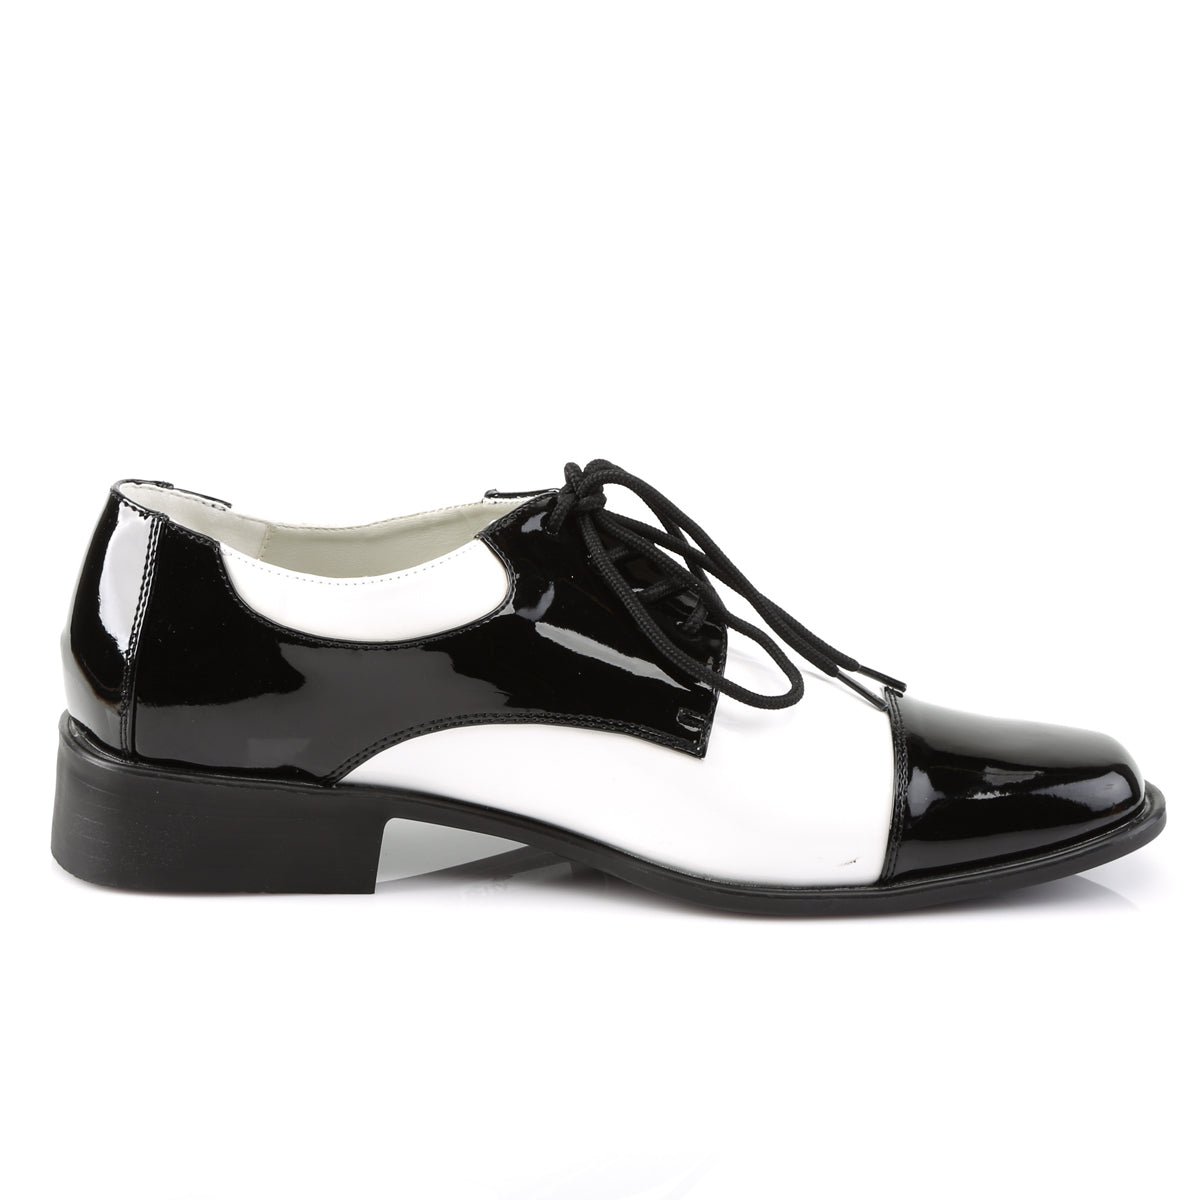 DISCO-18 Fancy Dress Costume Funtasma Men's Shoes Black-White Pat